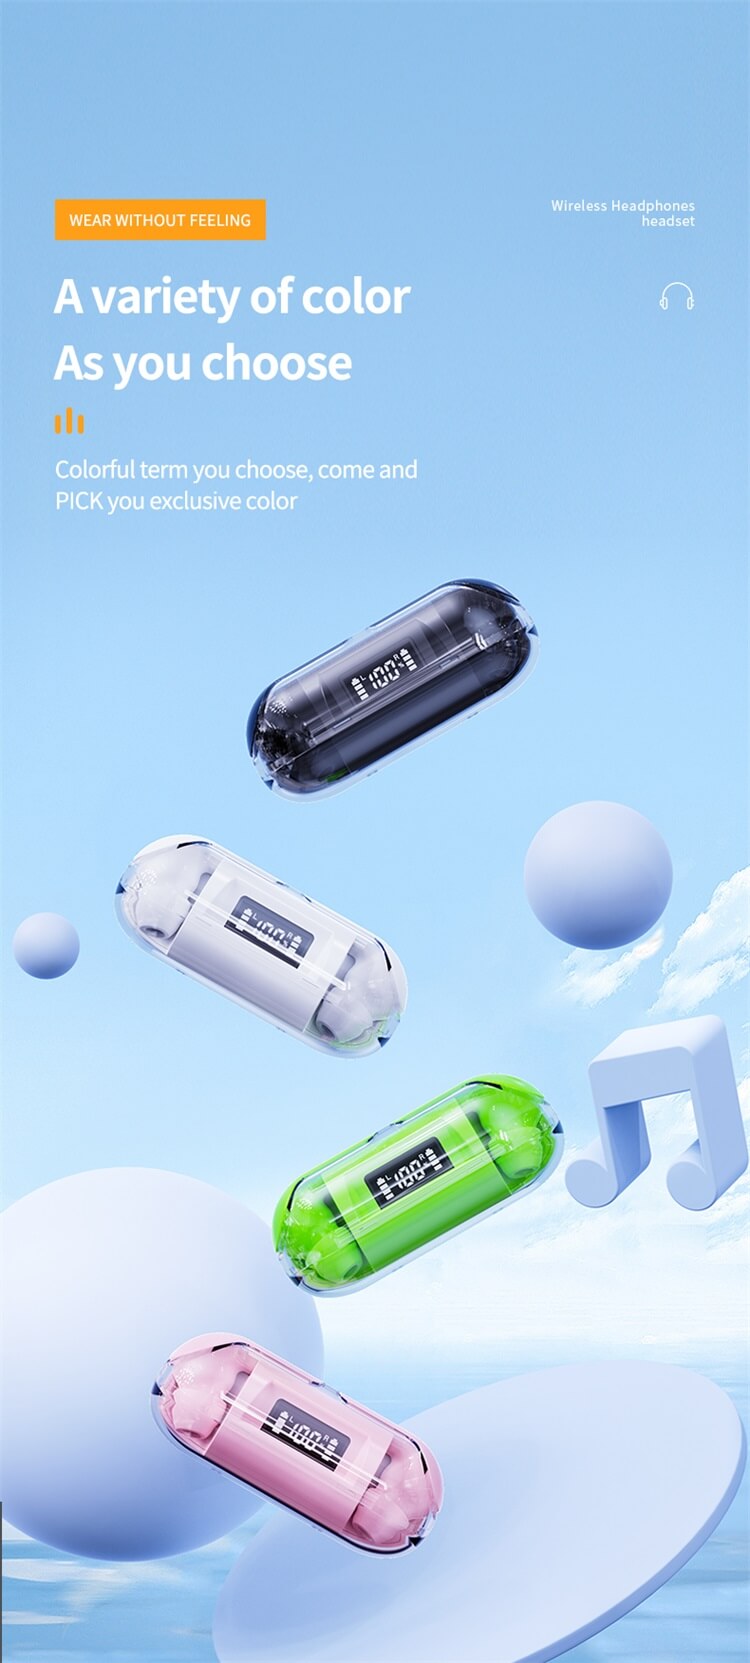 TM20 Earphone Translucent Shell Design Smart Voice Reduction Low Latency Games-Shenzhen Shengye Technology Co.,Ltd